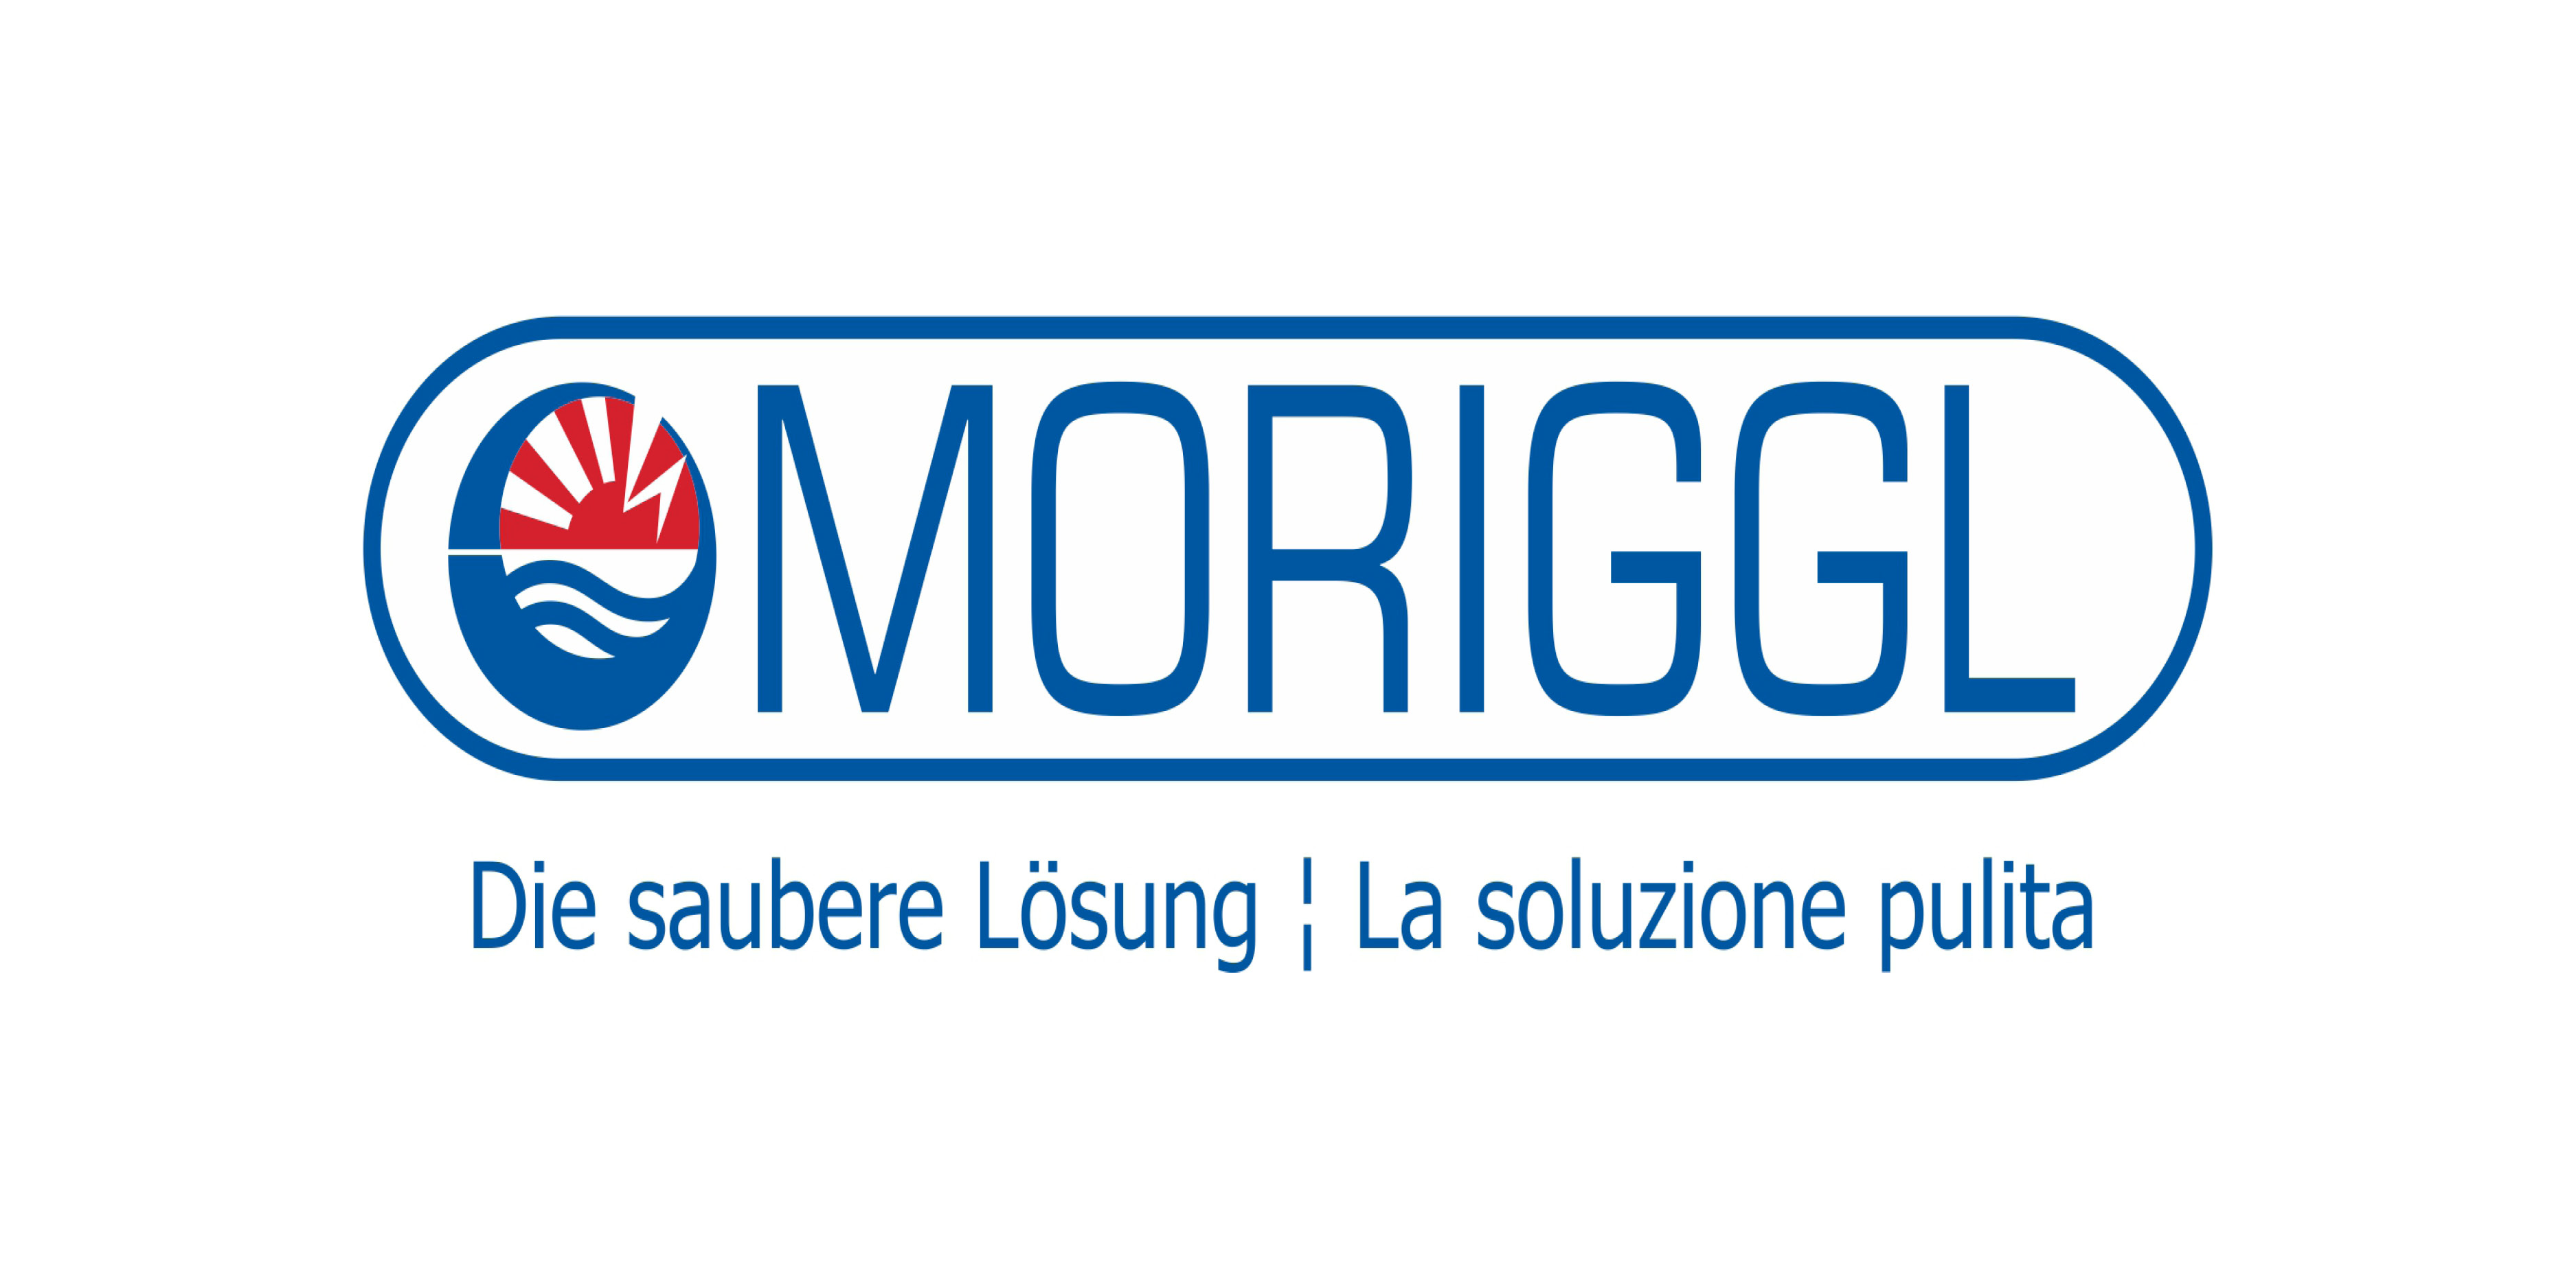 Moriggl GmbH | srl